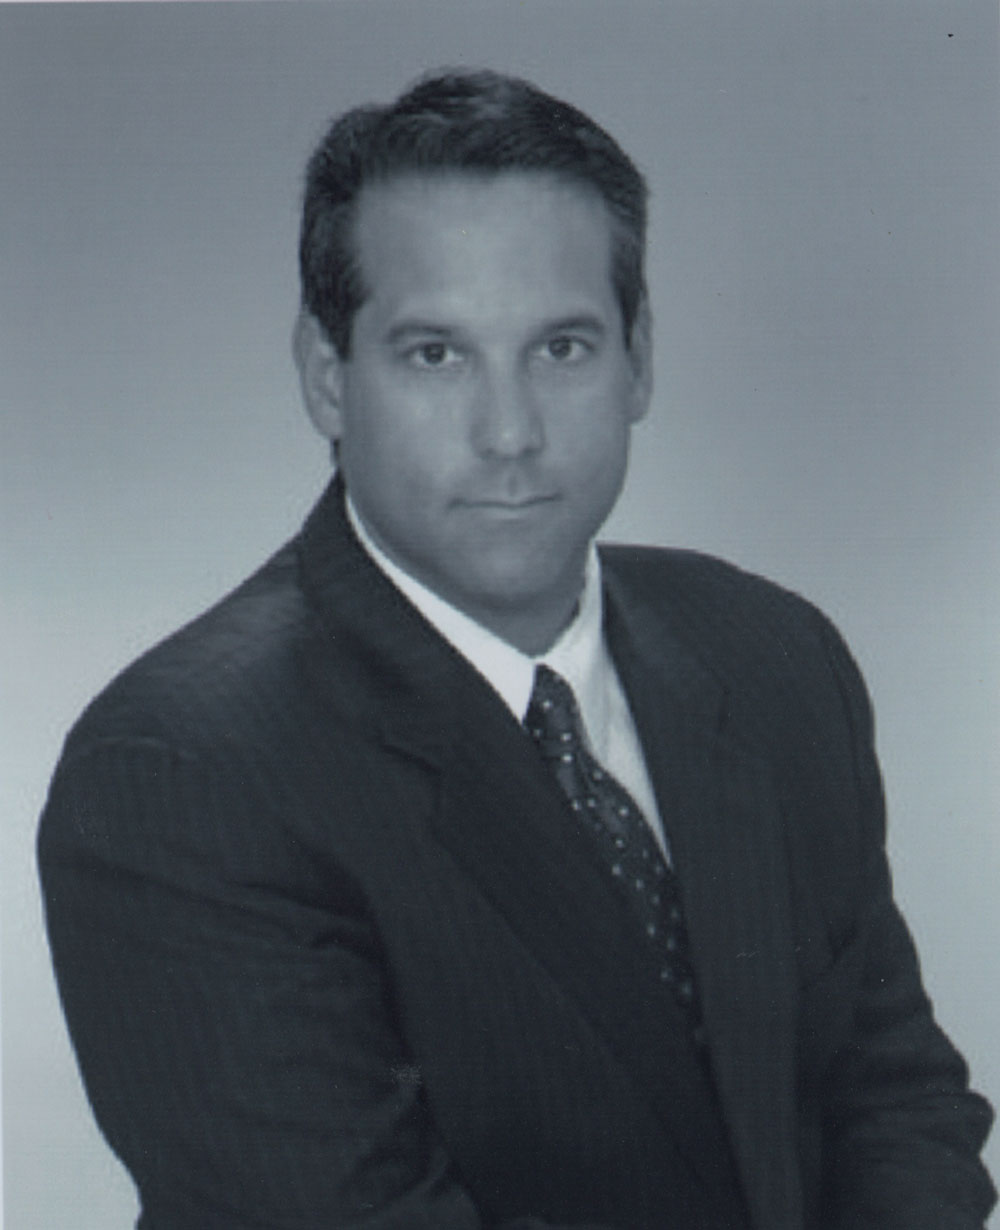 Michael G. Cherenson, PRSA President of 2009